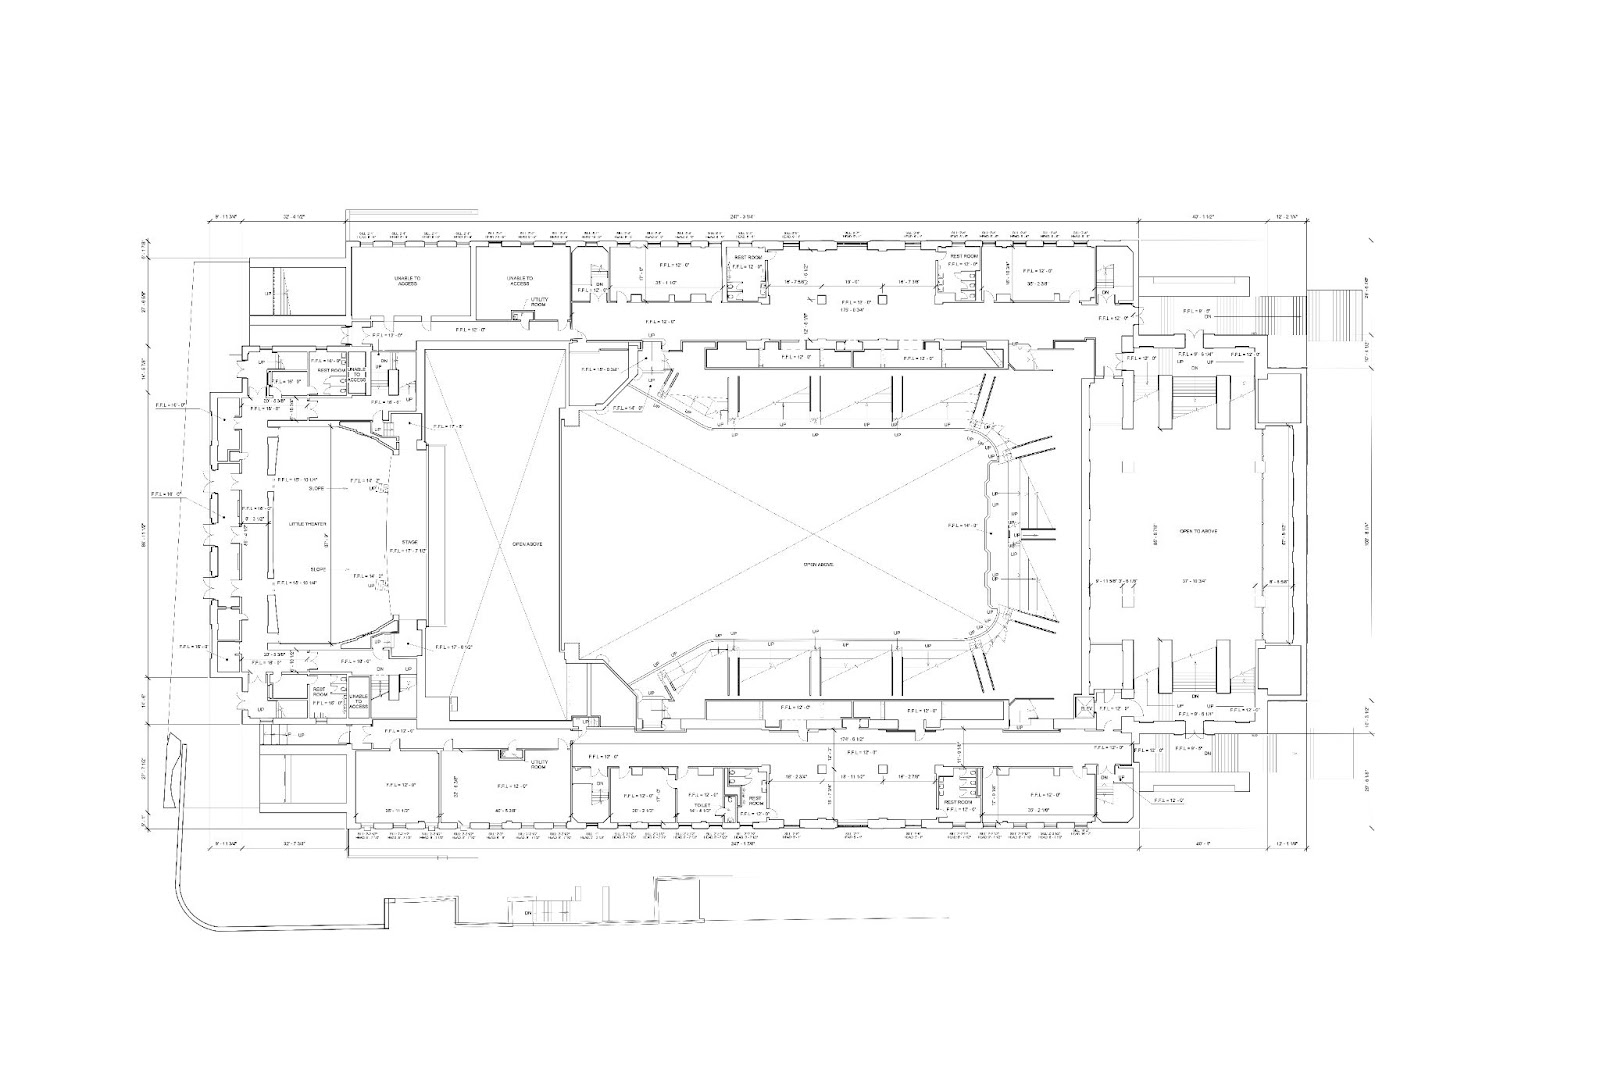 Floor plan of the Worcester Memorial Auditorium